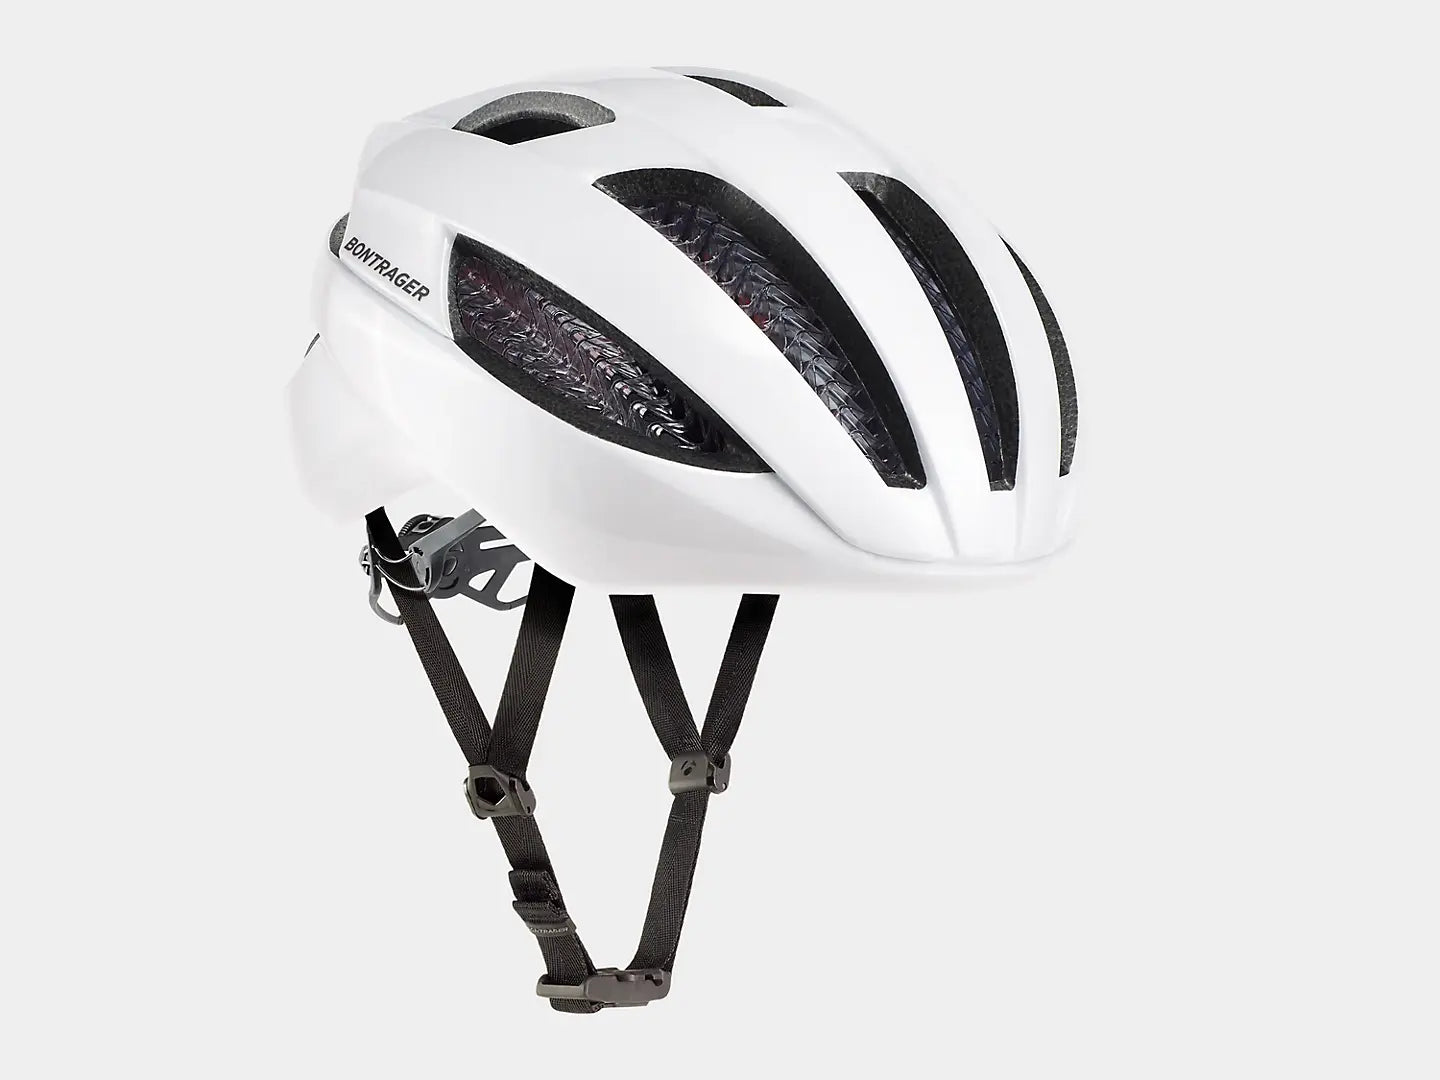 Helmet Bontrager Specter WaveCel CPSC - Advanced Bike Helmet